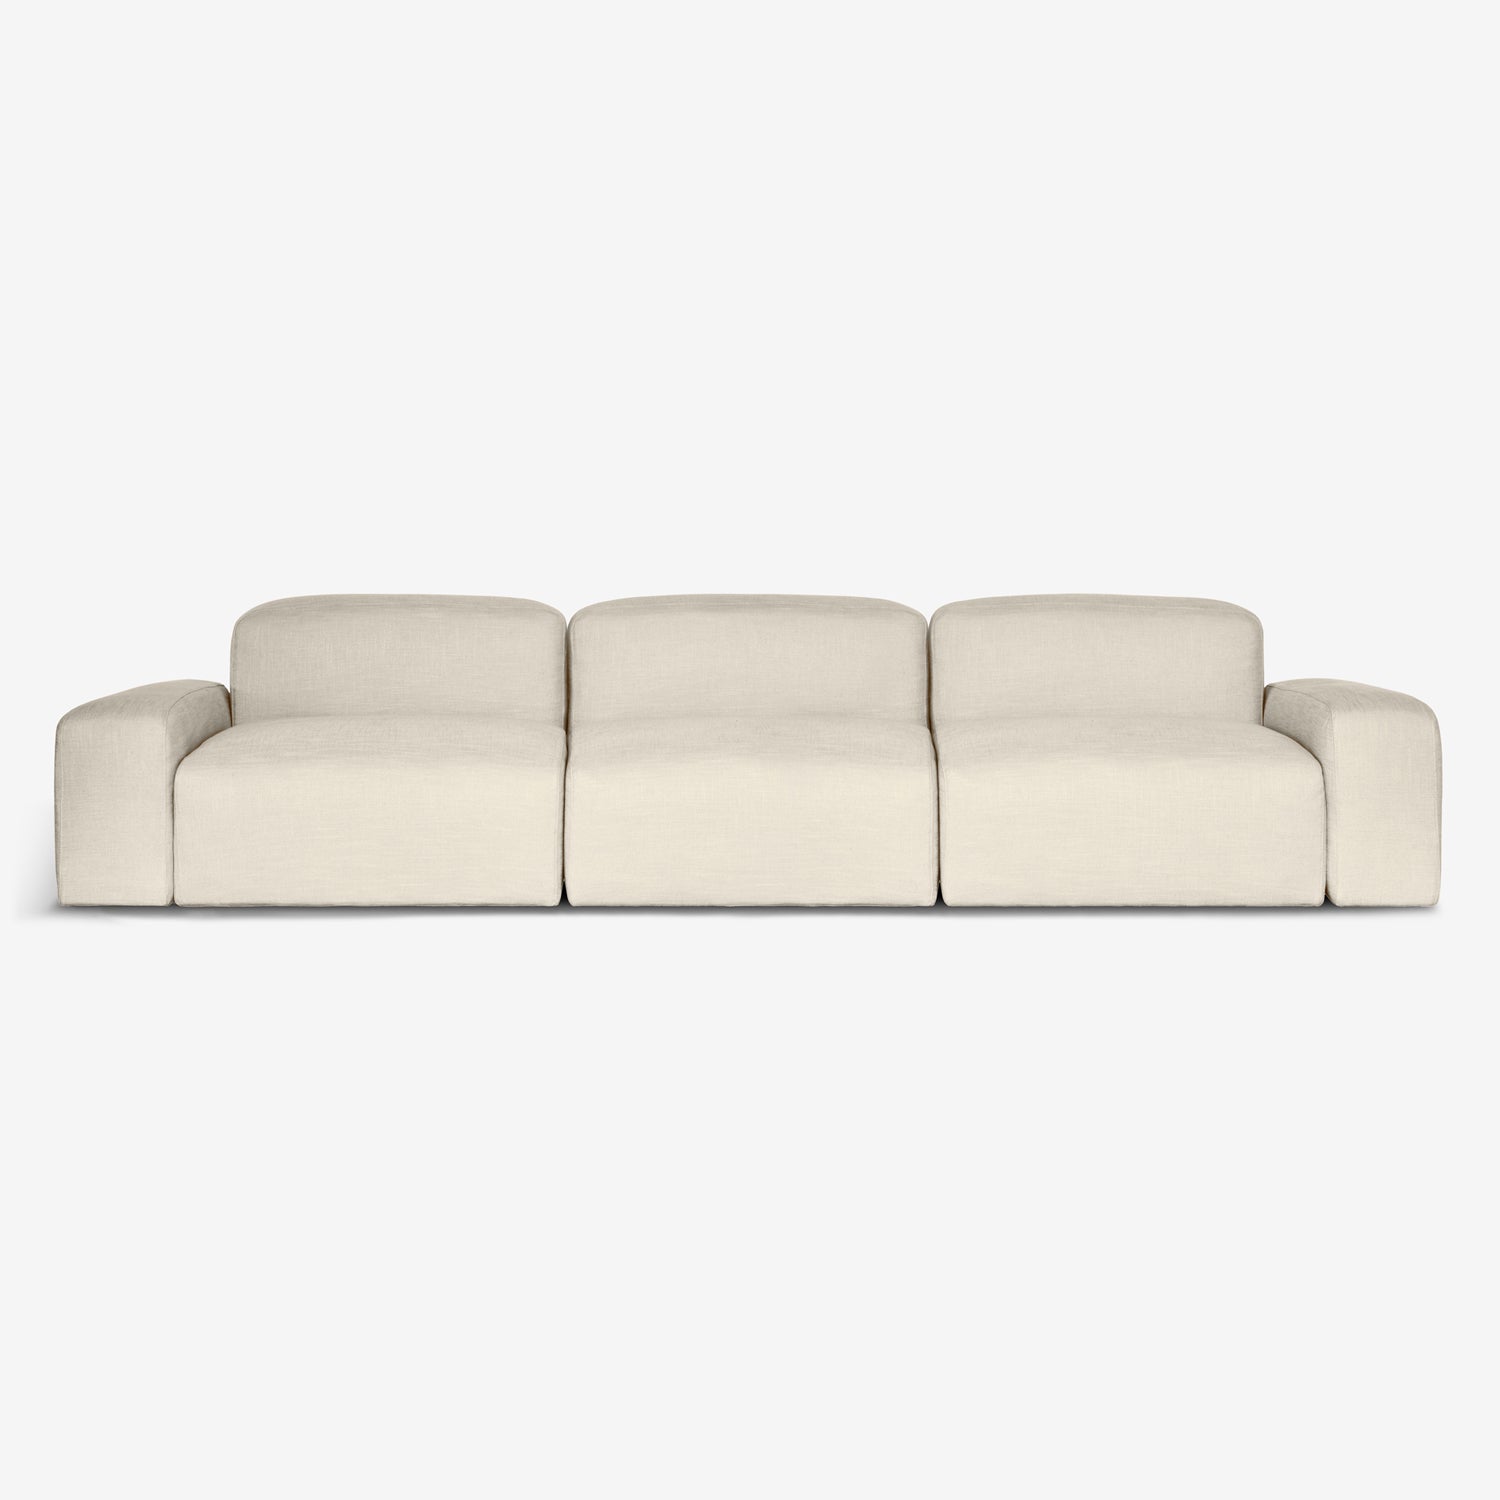 Stylish Sustainability: Libero Sofa View 3 seater in cream white